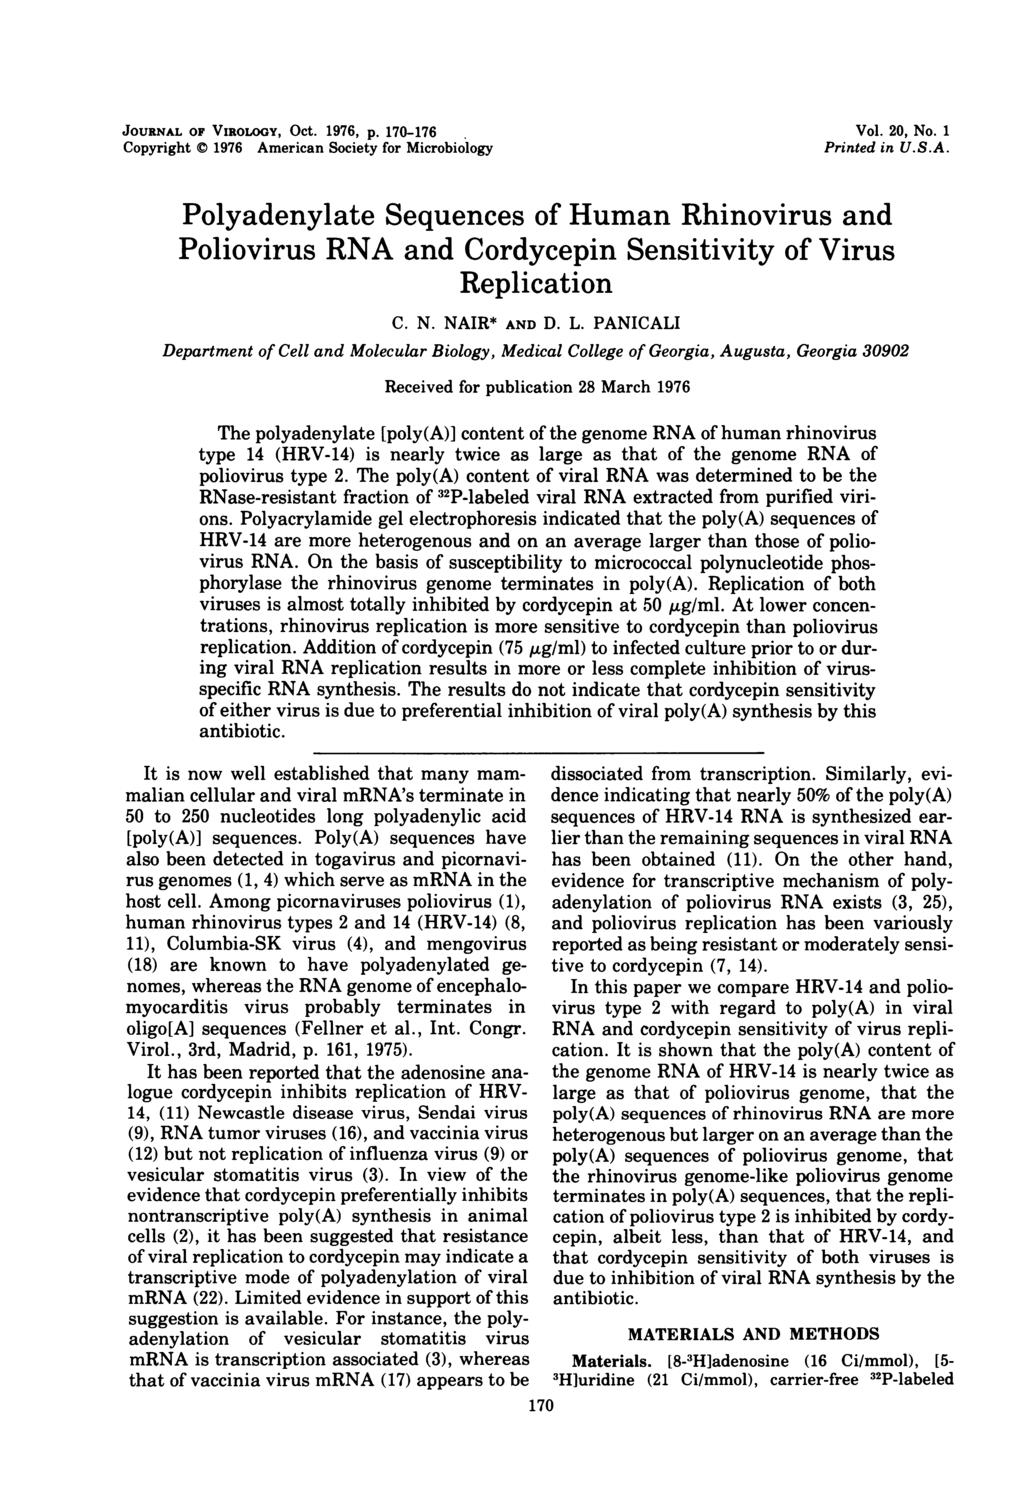 JOURNAL OF VIROLOGY, Oct. 1976, p. 170-176 Copyright 1976 American Society for Microbiology Vol. 20, No. 1 Printed in U.S.A. Polyadenylate Sequences of Human Rhinovirus and Poliovirus RNA and Cordycepin Sensitivity of Virus Replication C.